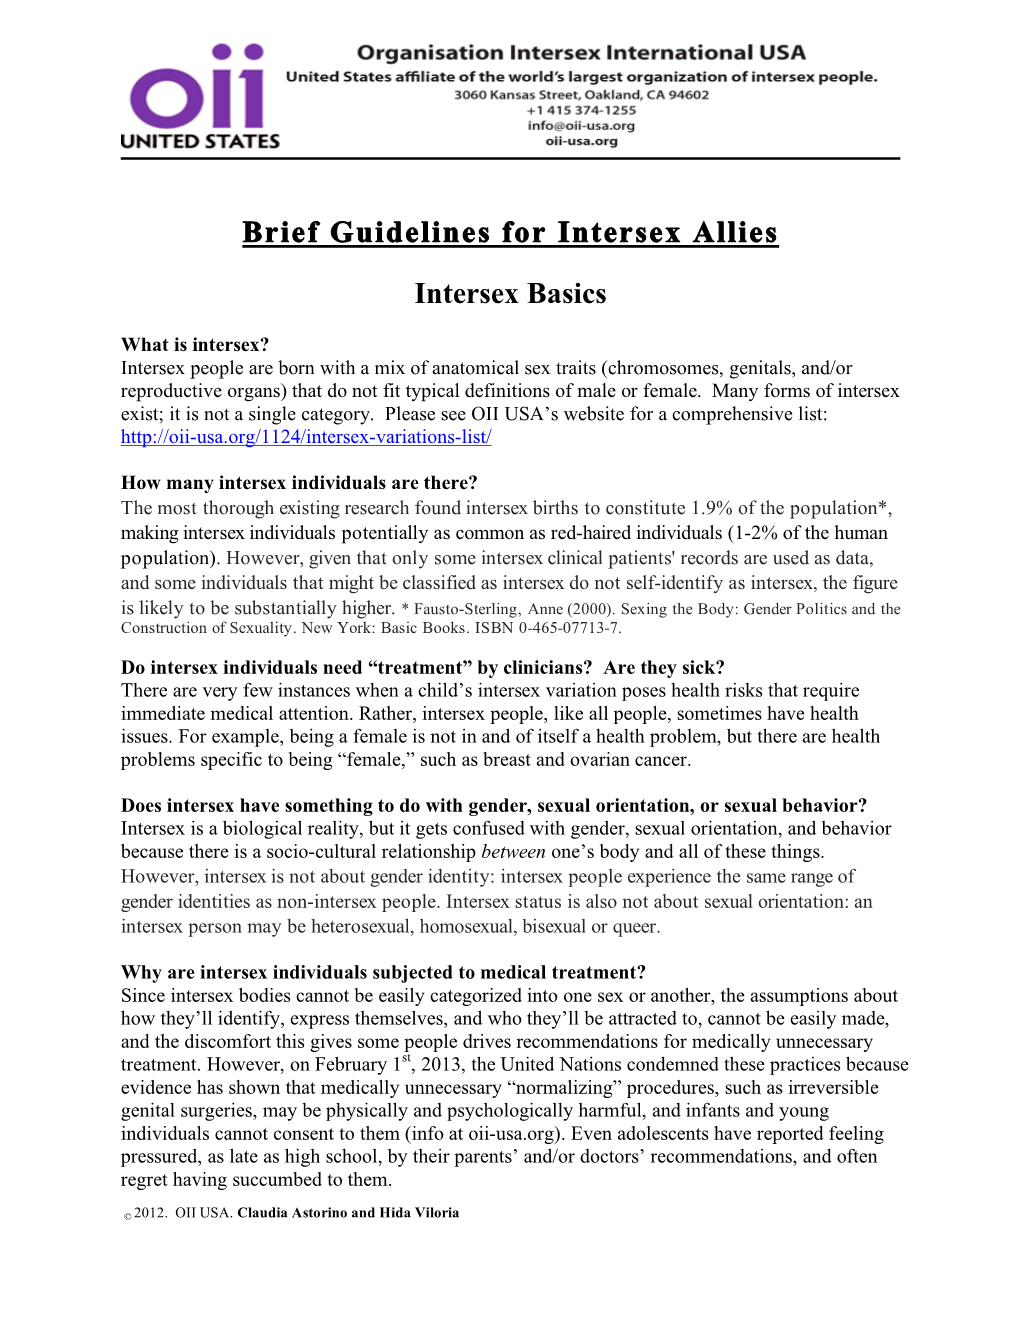 Brief Guidelines for Intersex Allies Intersex Basics